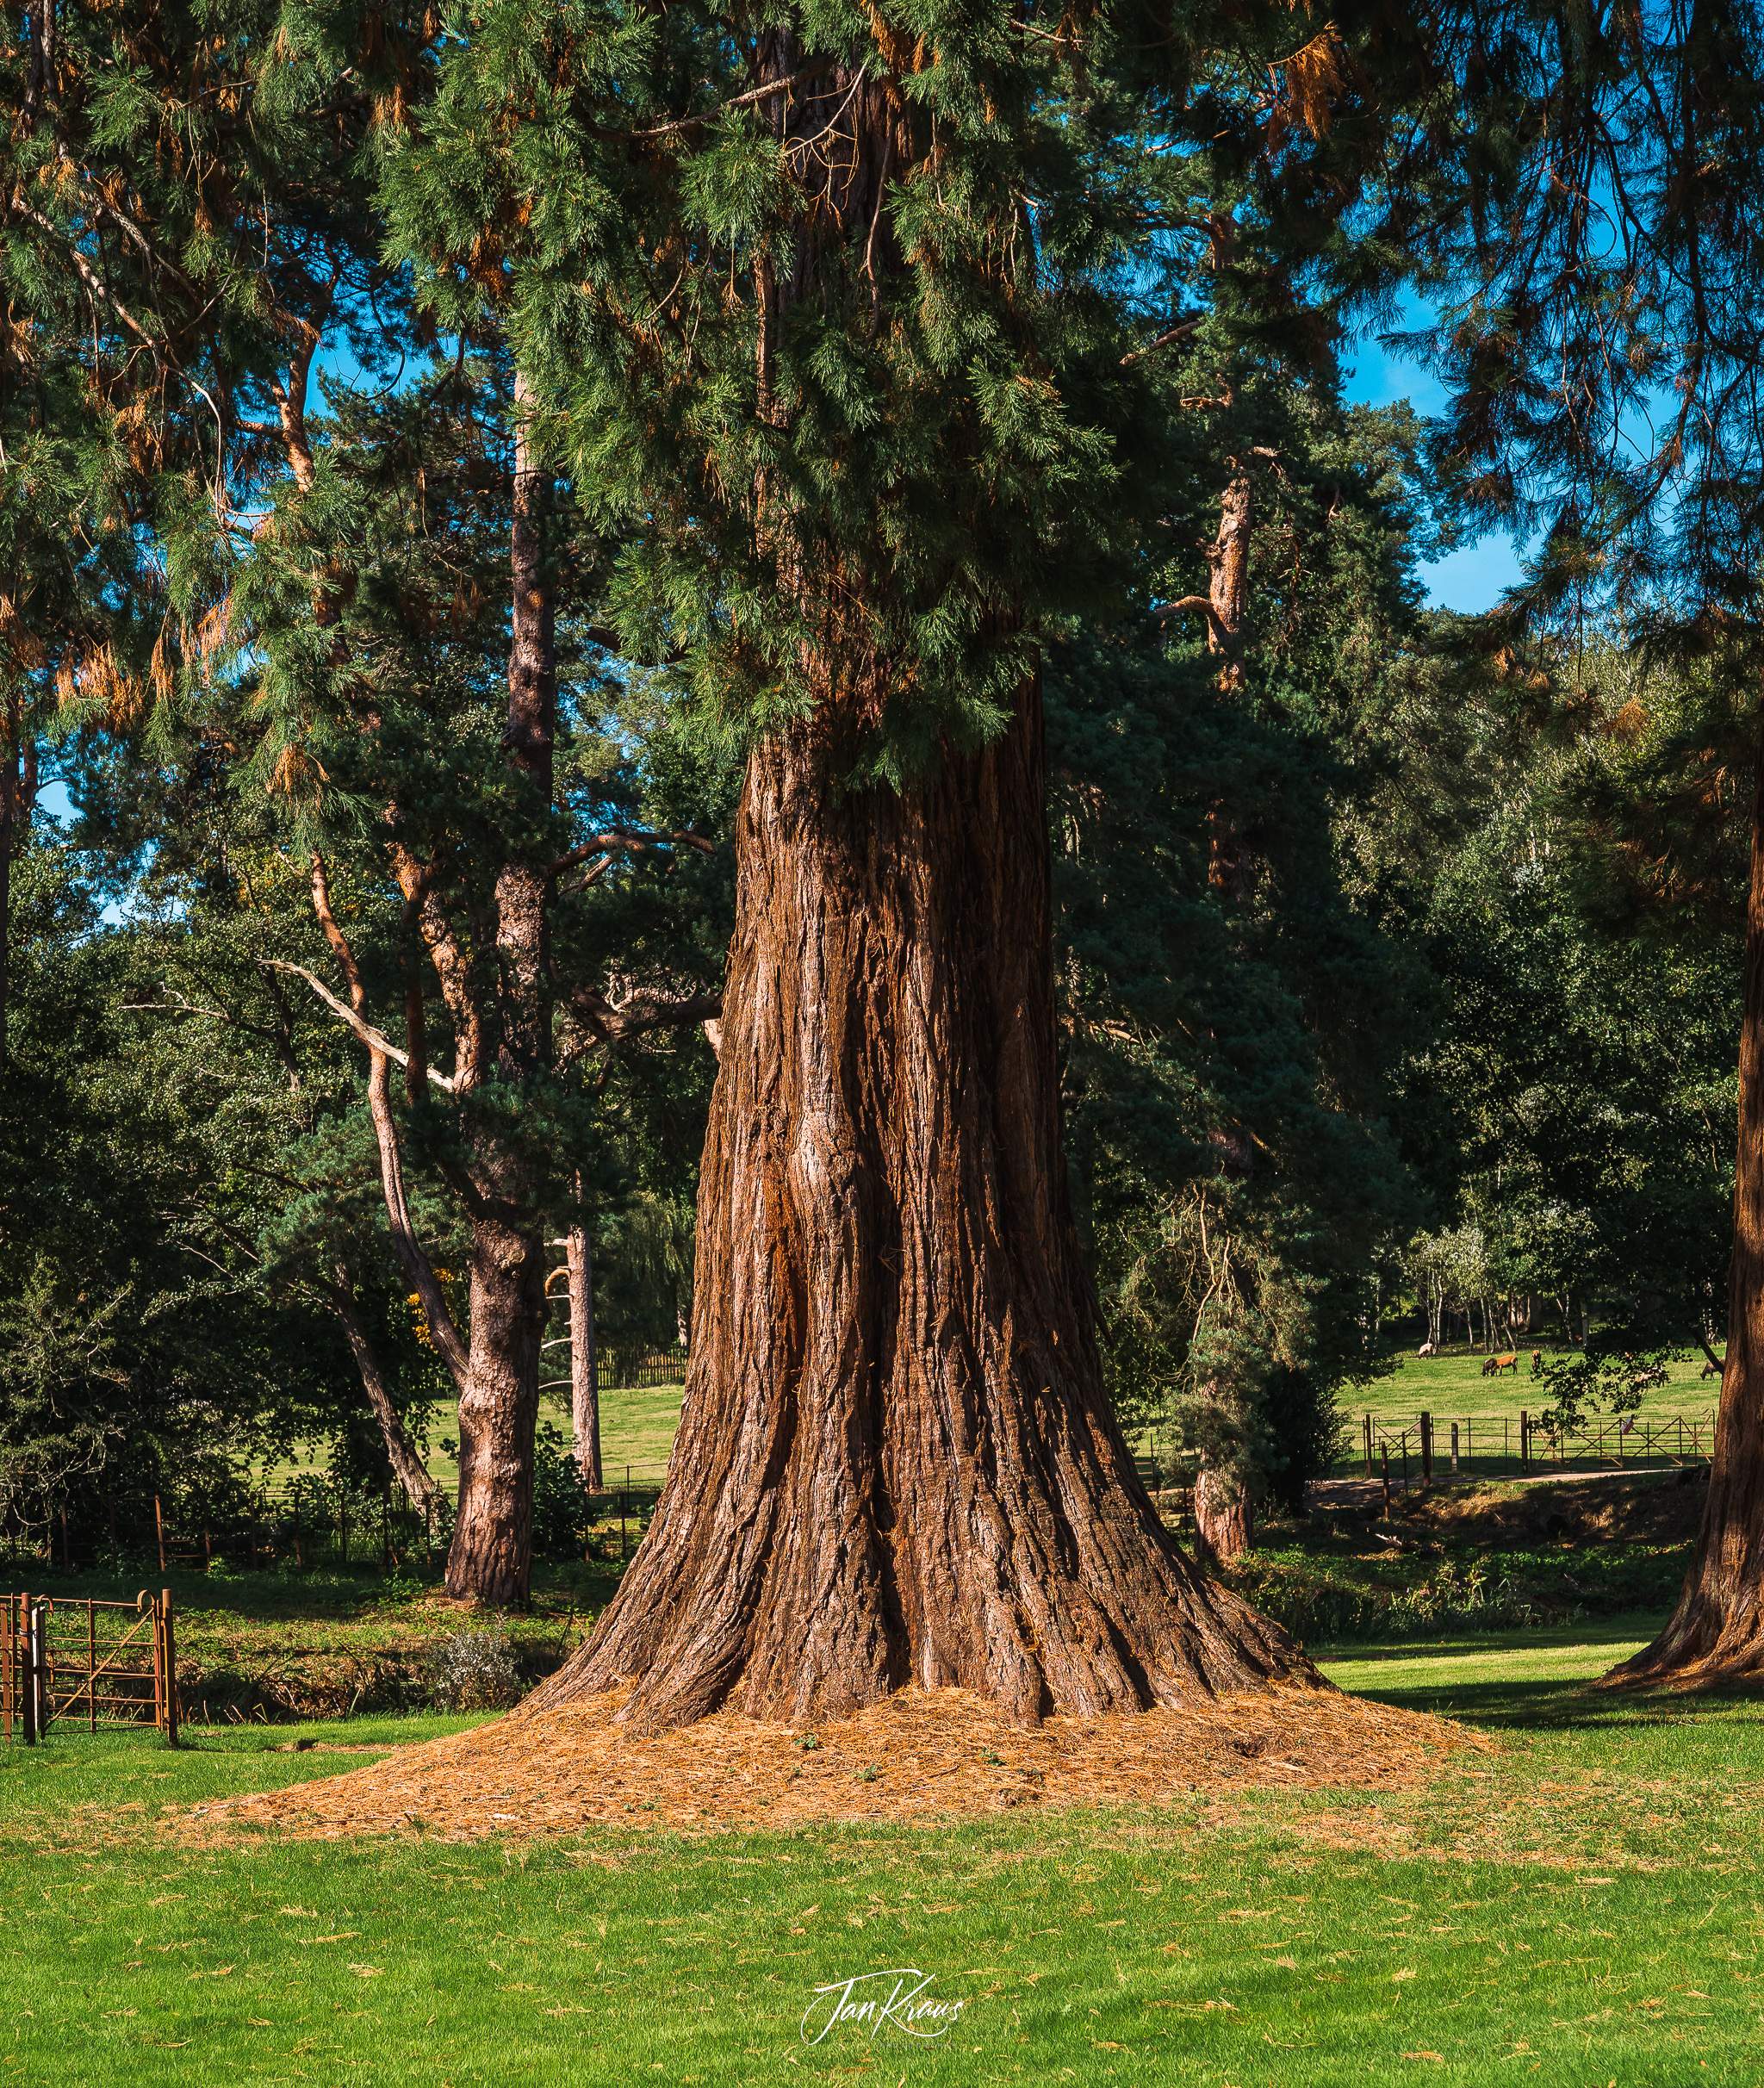 A giant redwood at Groombridge Place, Kent, England, UK